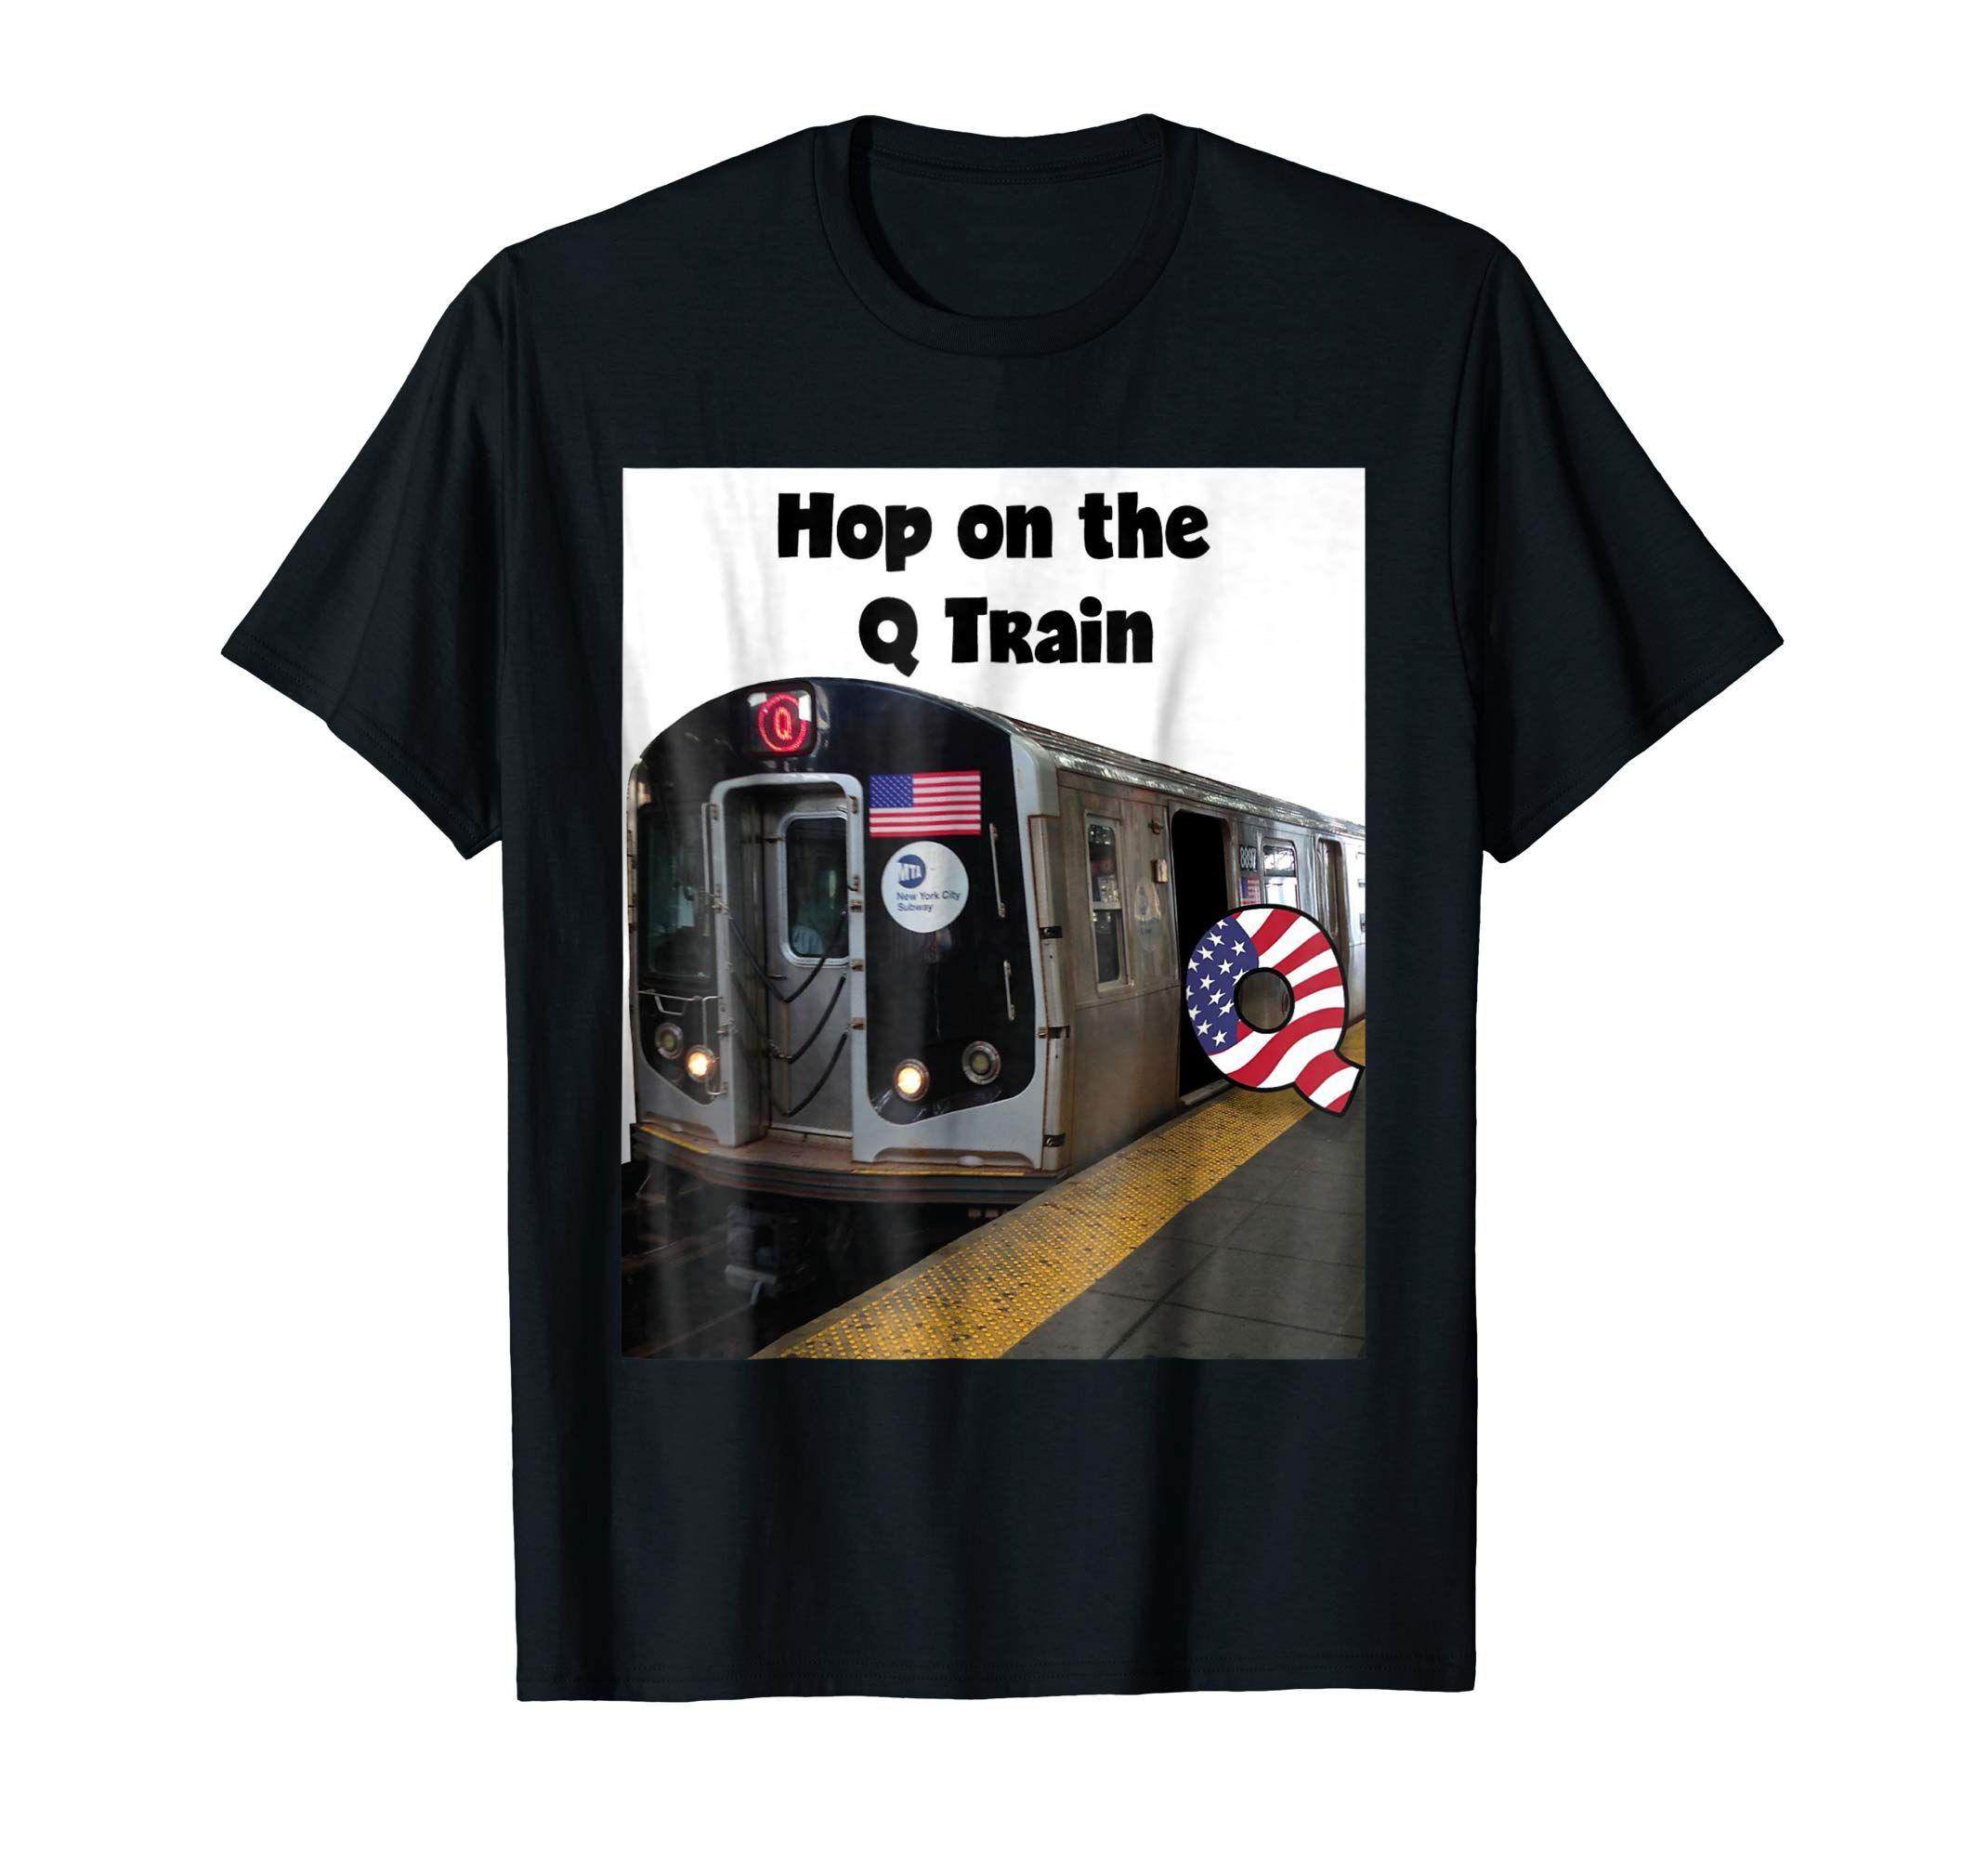 Q Train Logo - Amazon.com: Hop On the Q Train: Clothing